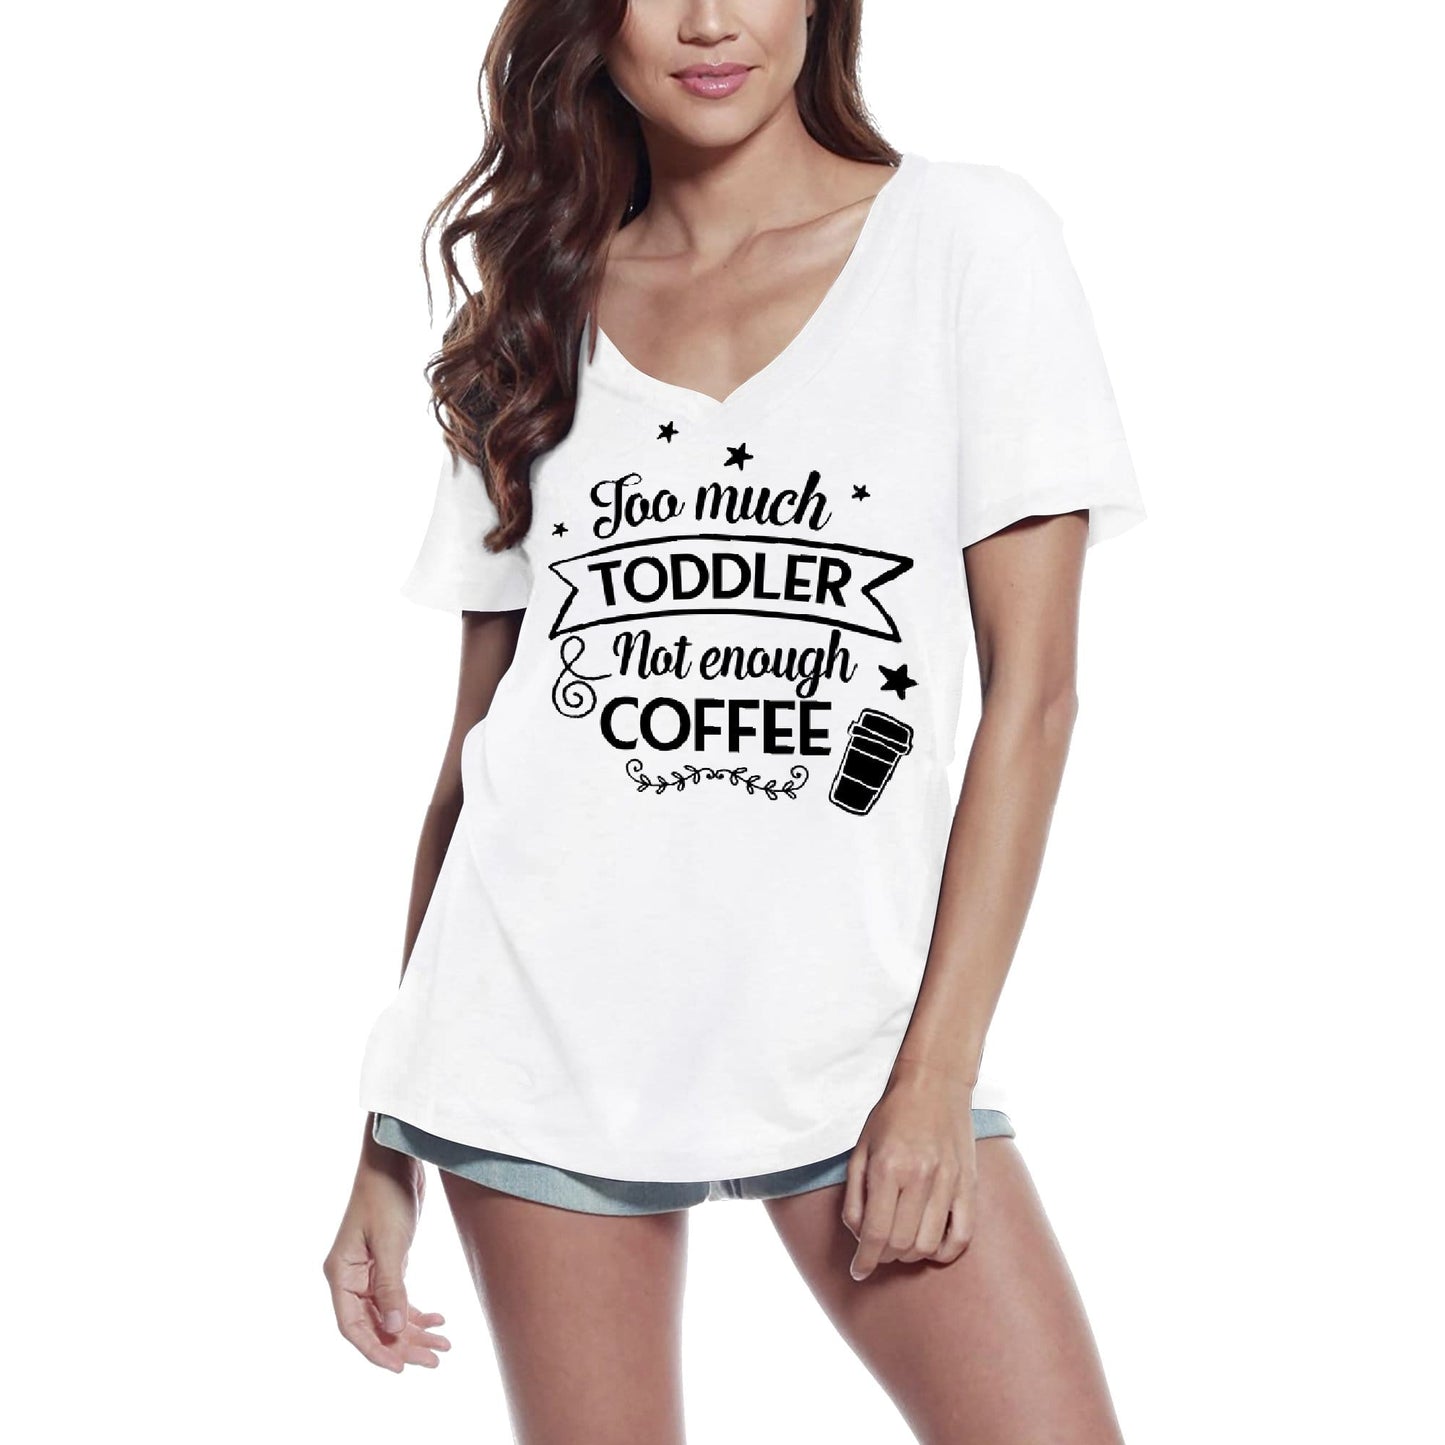 ULTRABASIC Women's T-Shirt Too Much Toddler Not Enough Coffee - Short Sleeve Tee Shirt Tops